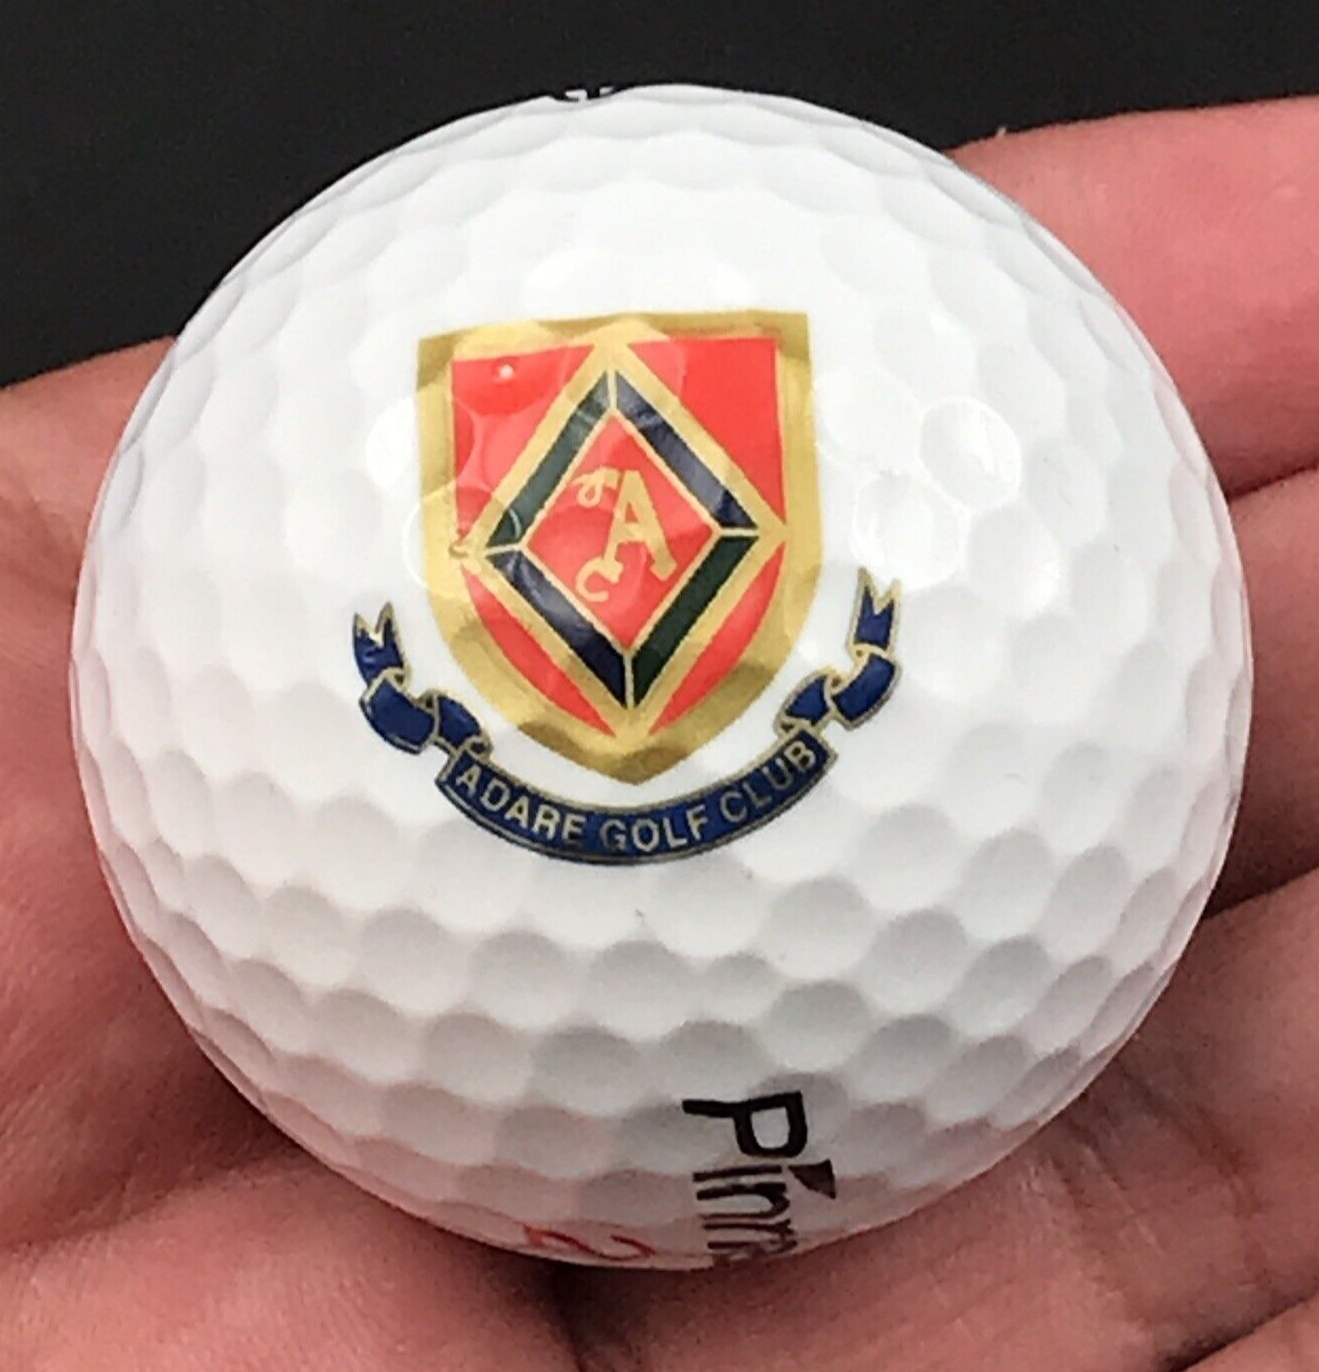 Adare Country Club Limerick Ireland Souvenir Golf Ball Pinnacle Gold Distance - $13.99